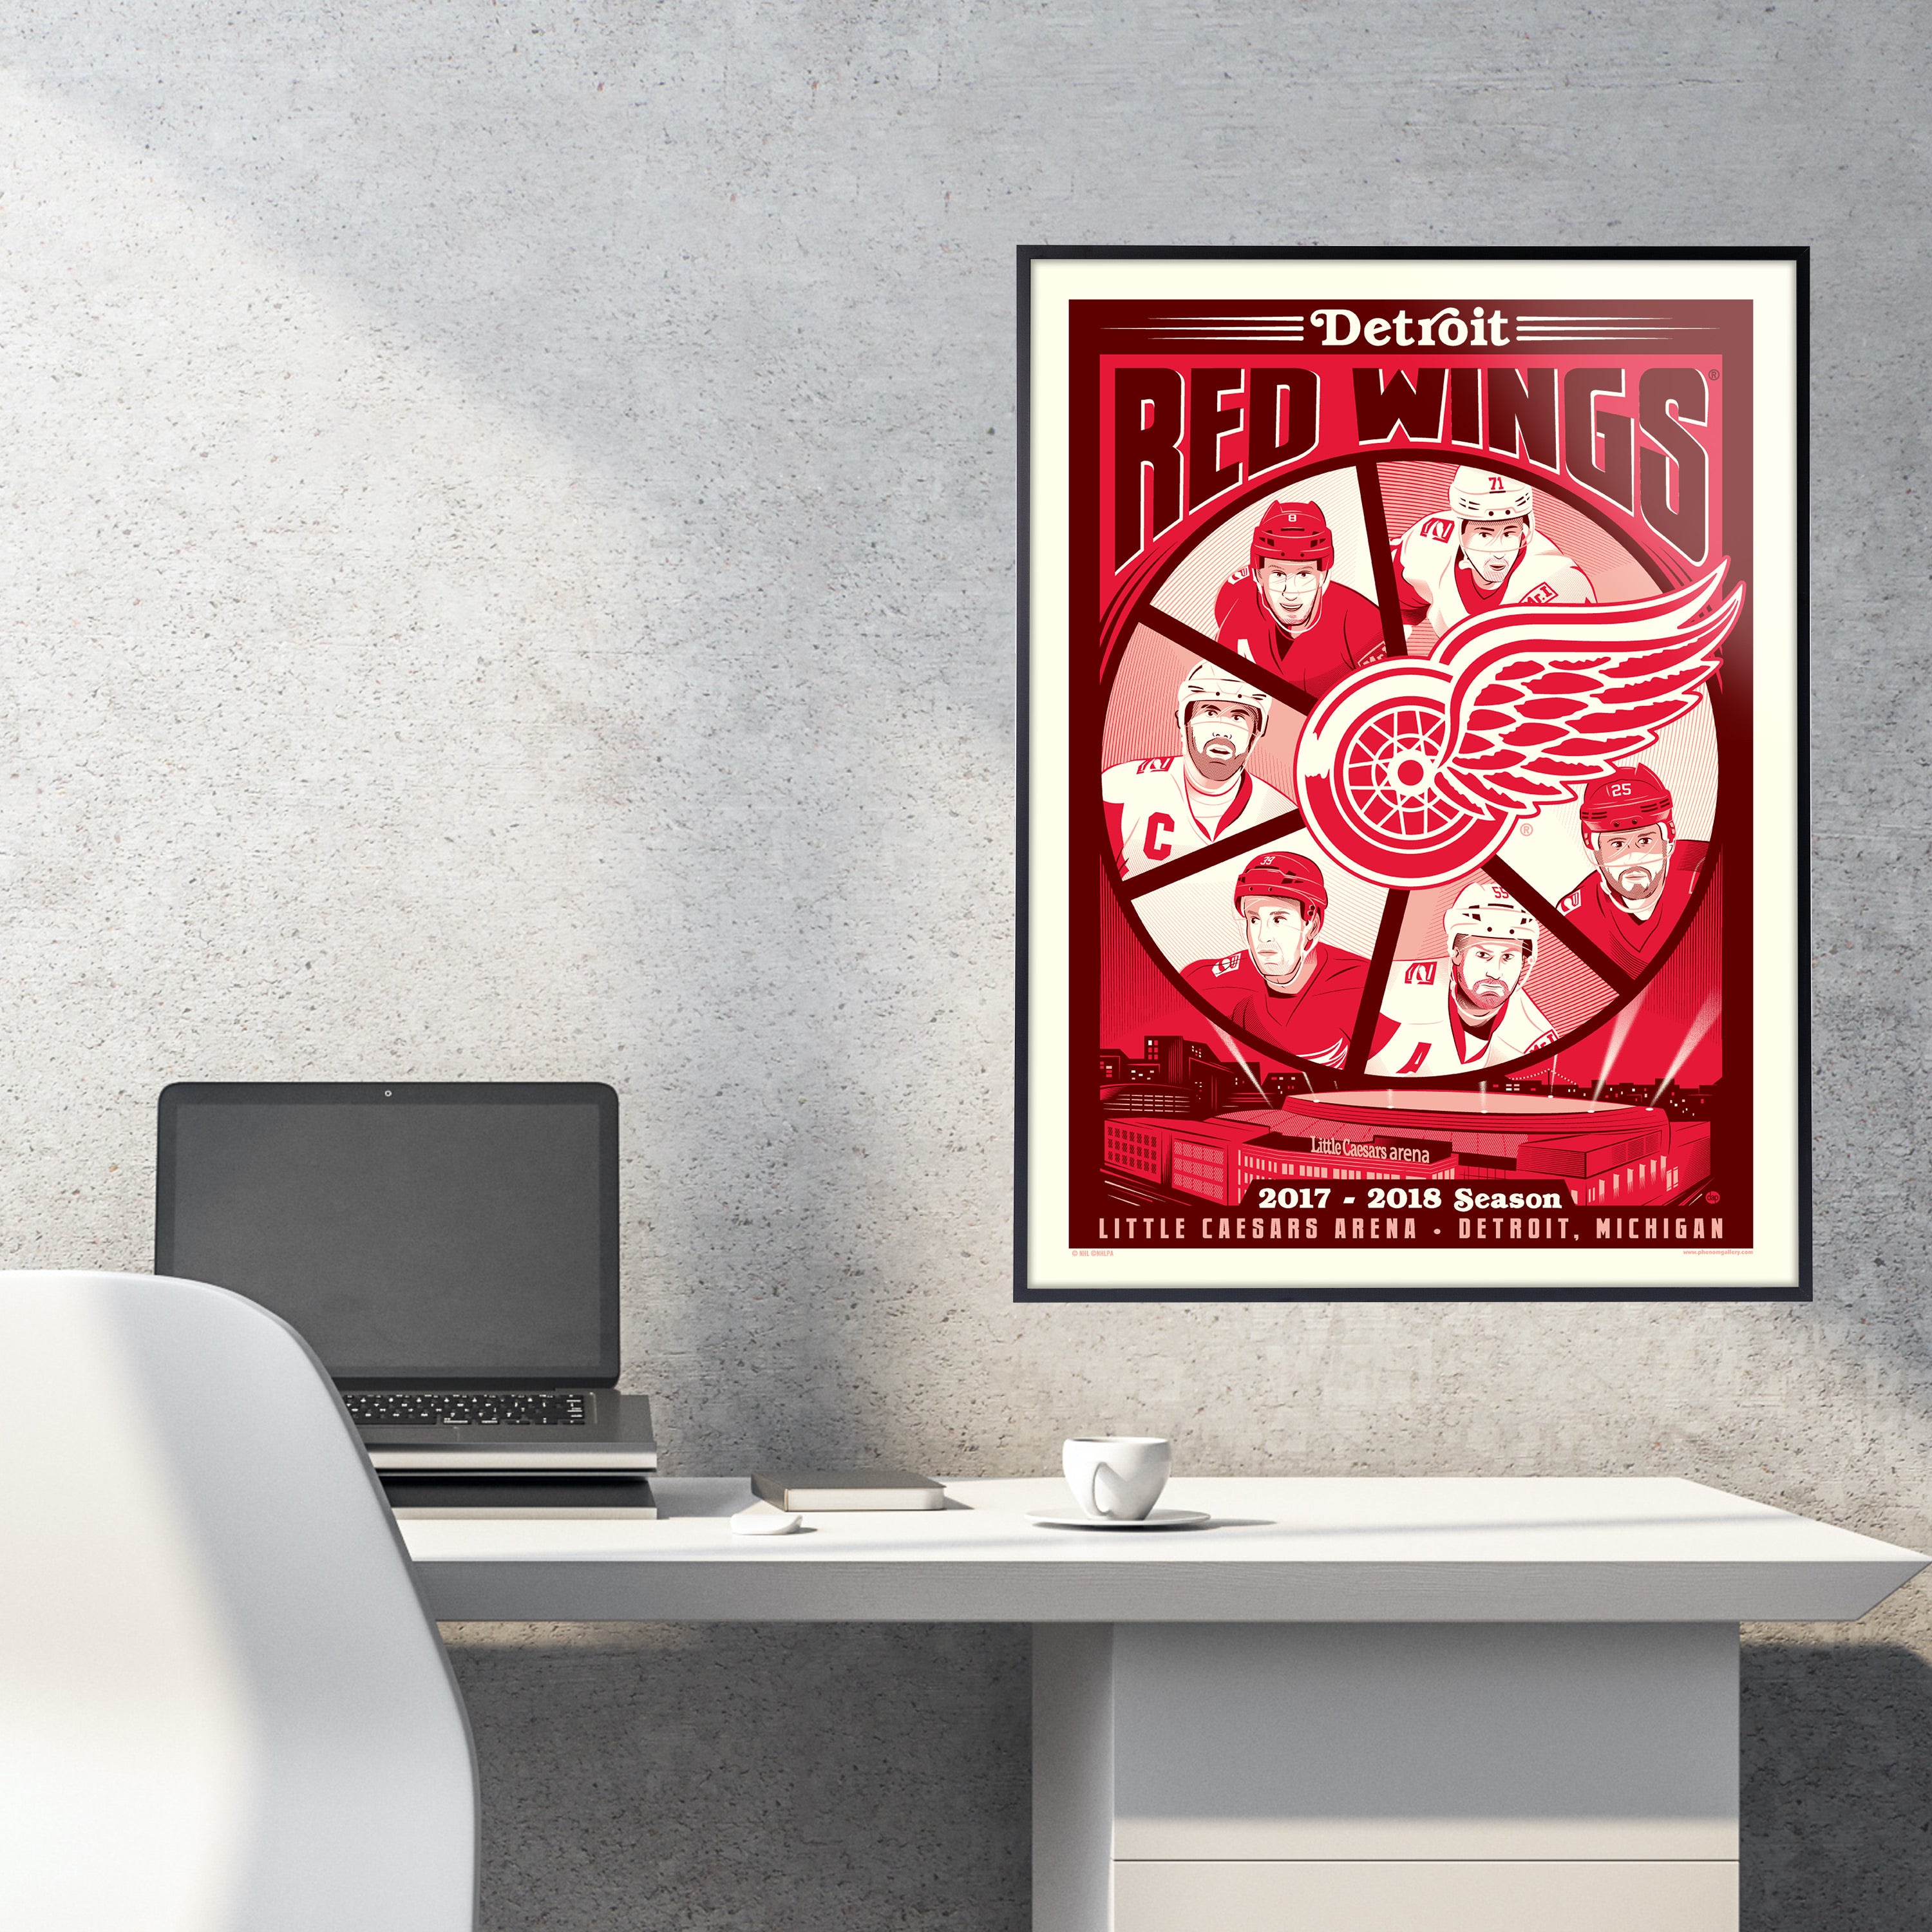 Detroit Red Wings Display Mementos at 25th Anniversary